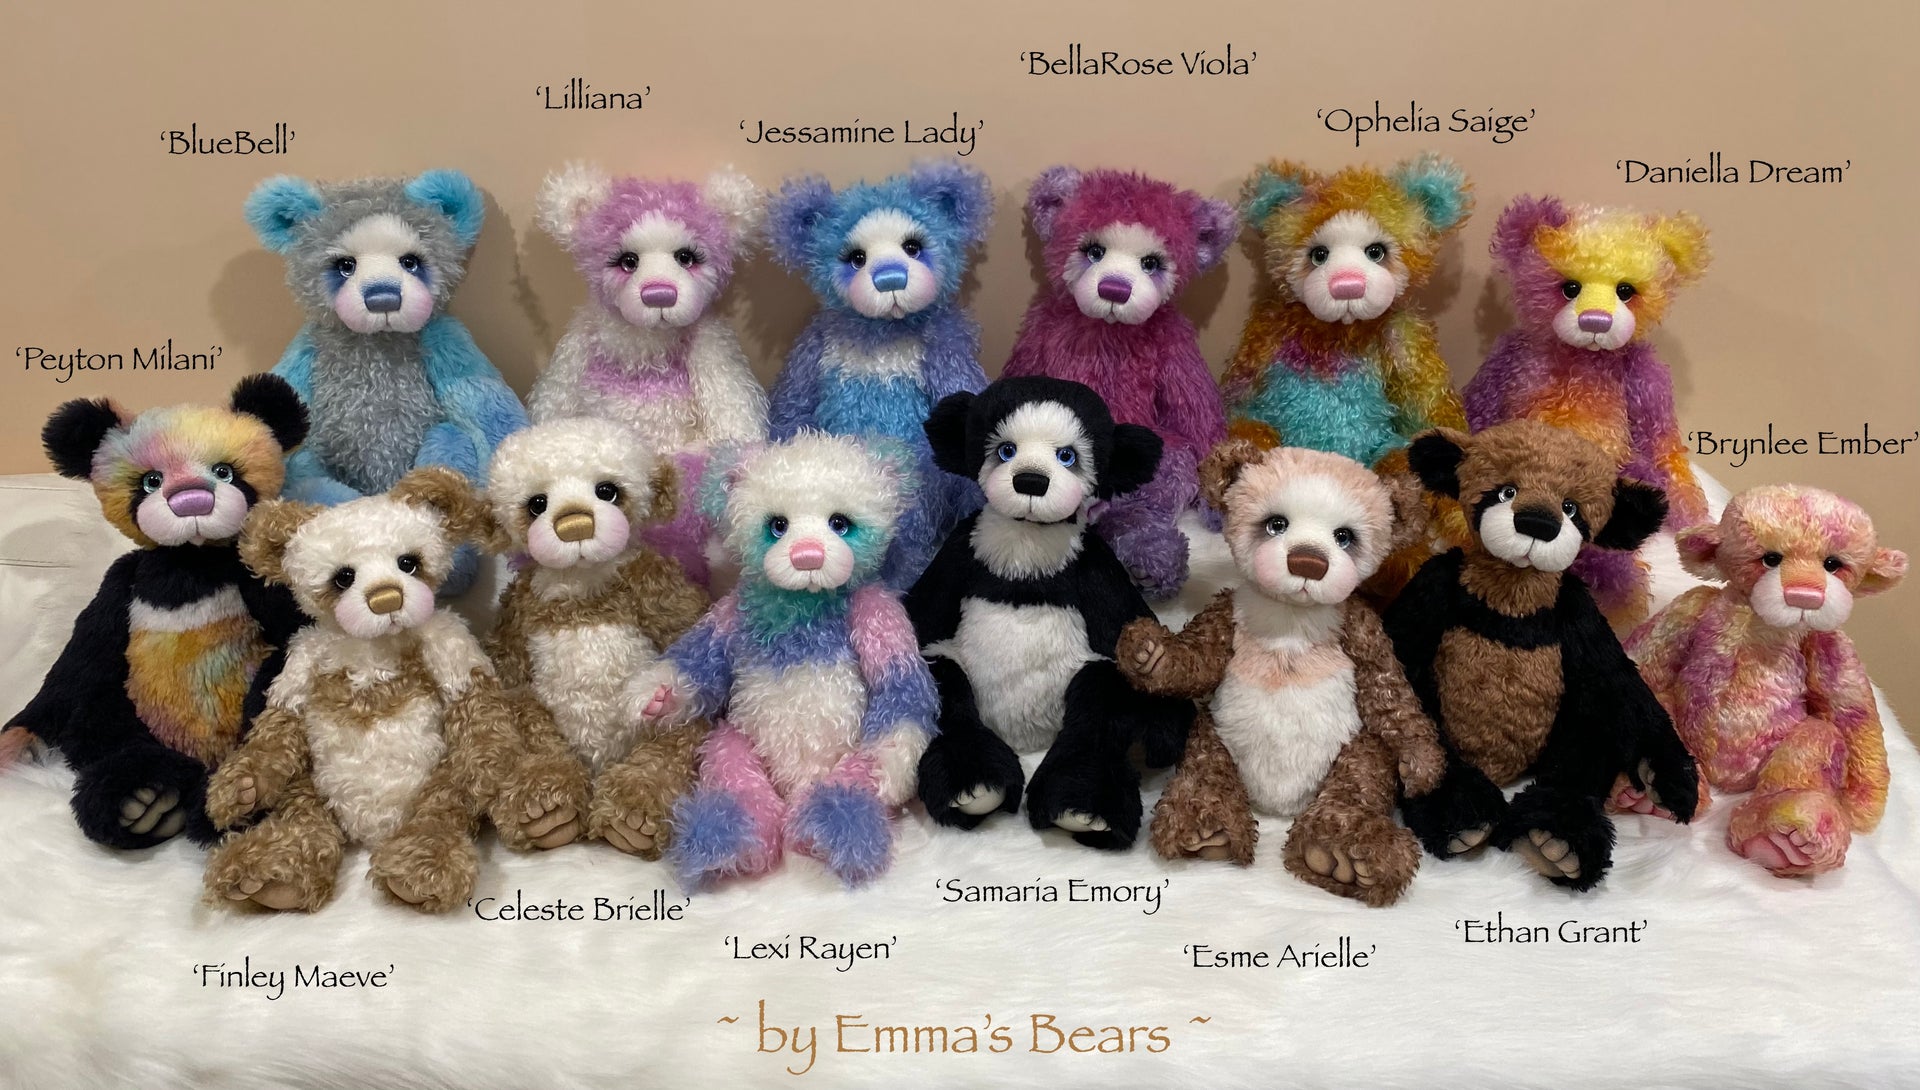 Brynlee Ember - 17" Mohair Artist Baby Bear by Emma's Bears - OOAK